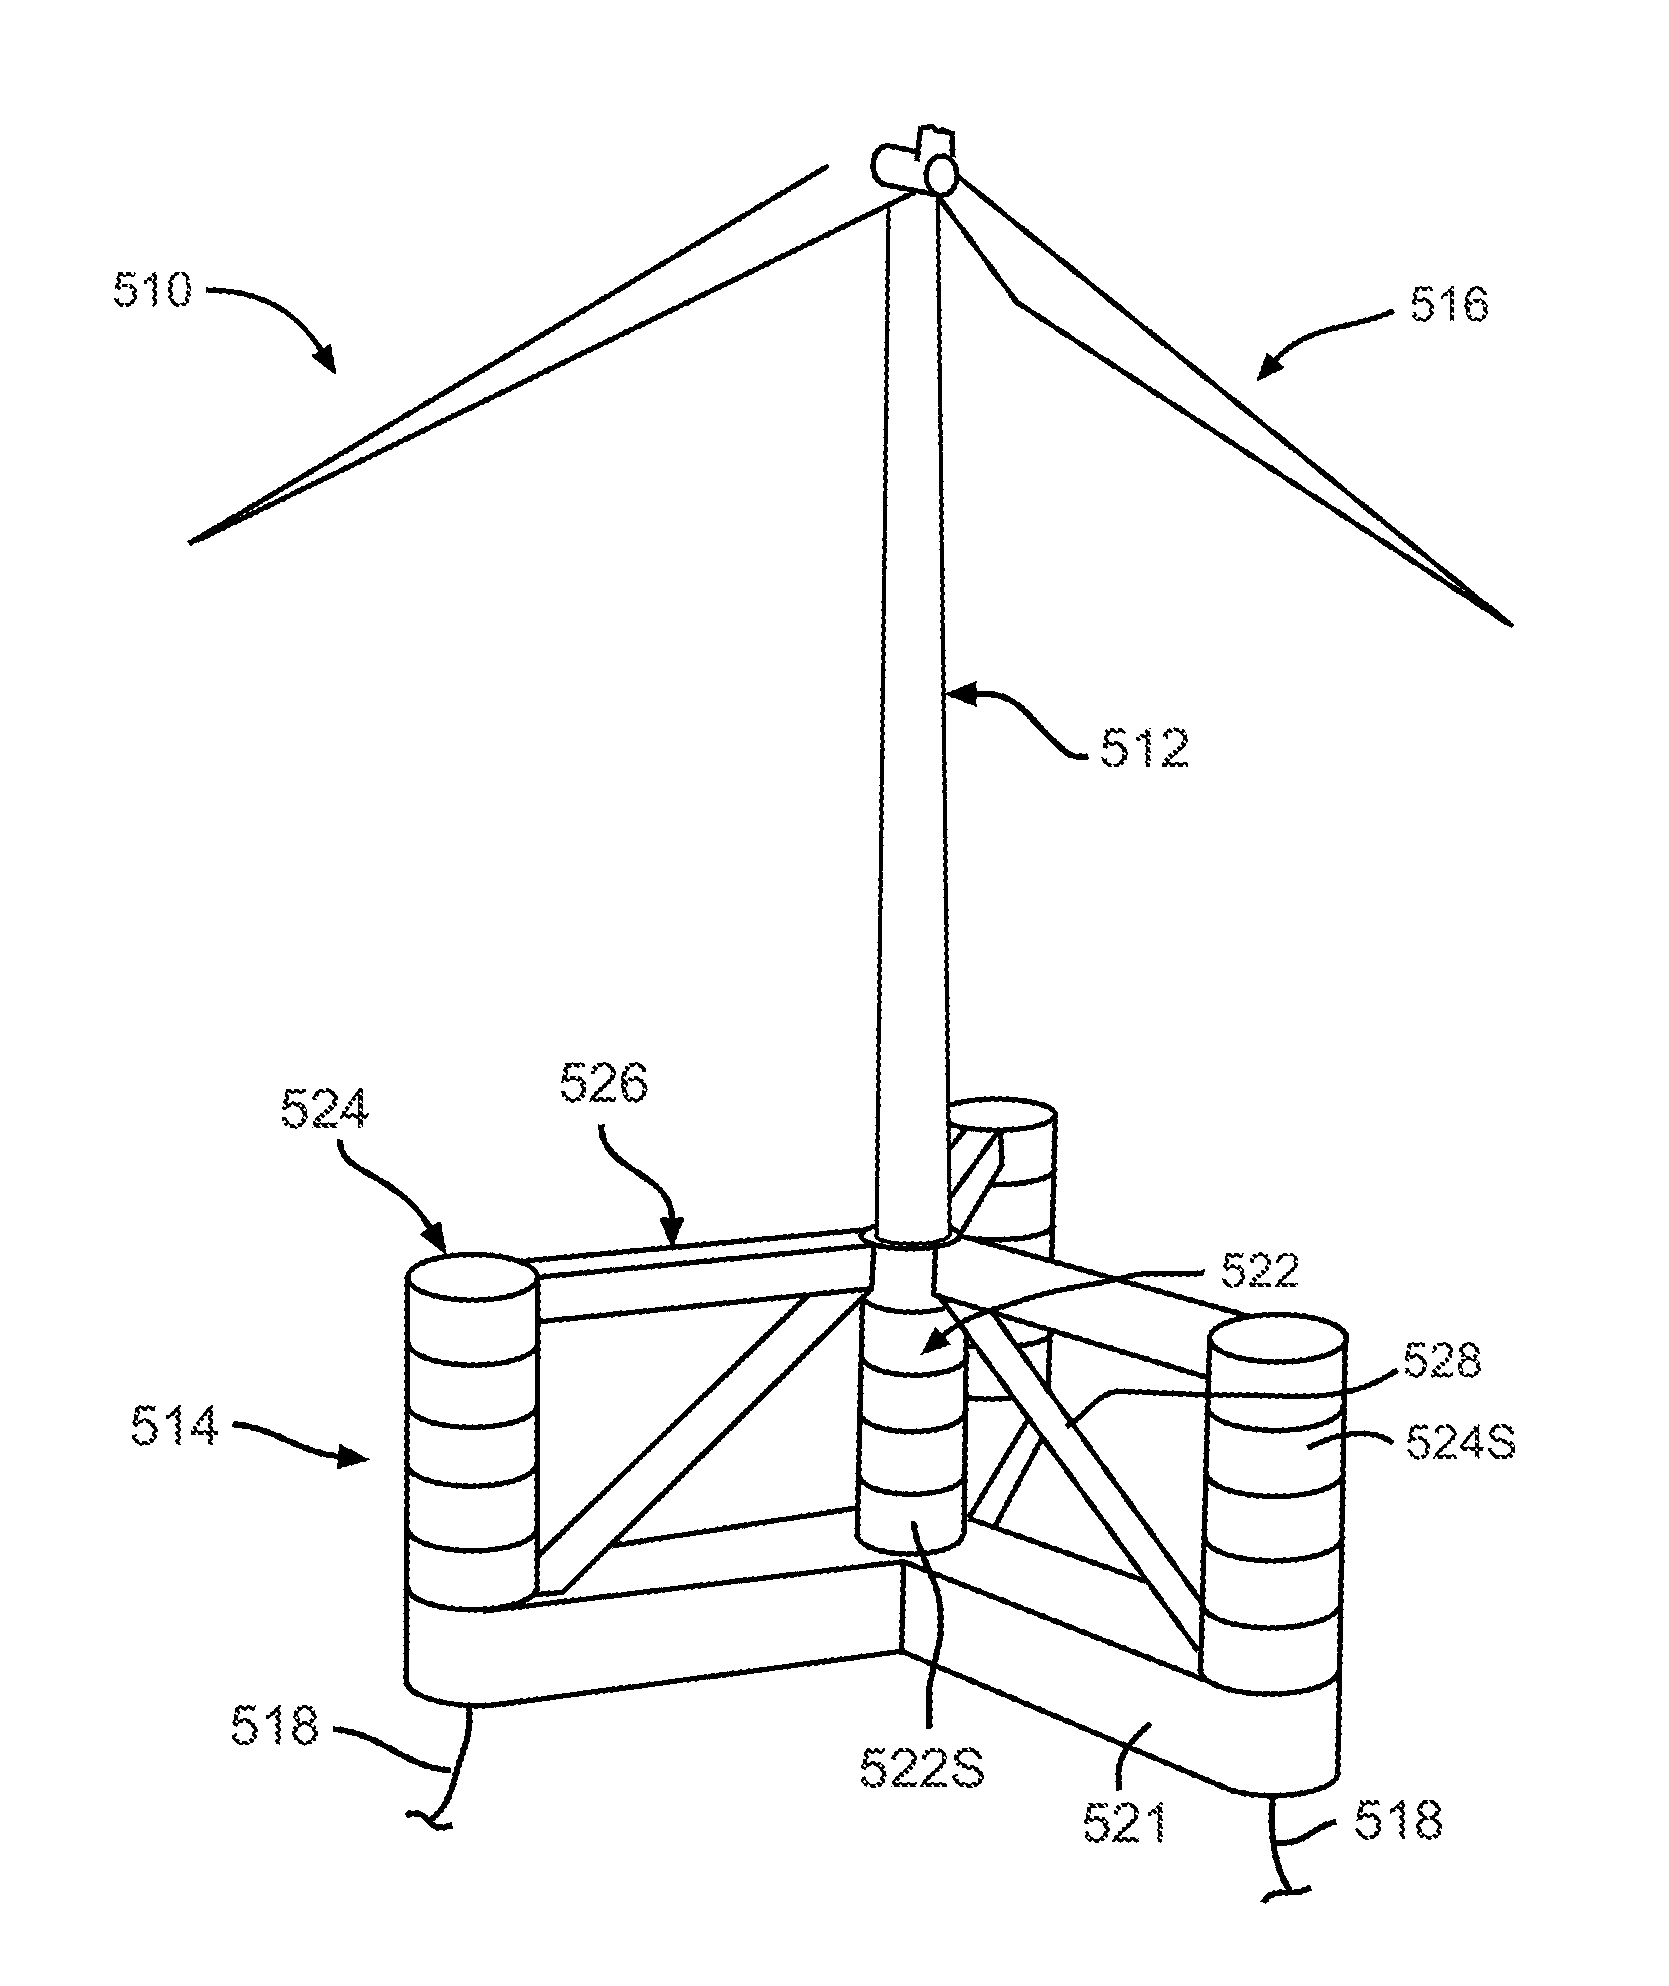 Floating wind turbine platform and method of assembling